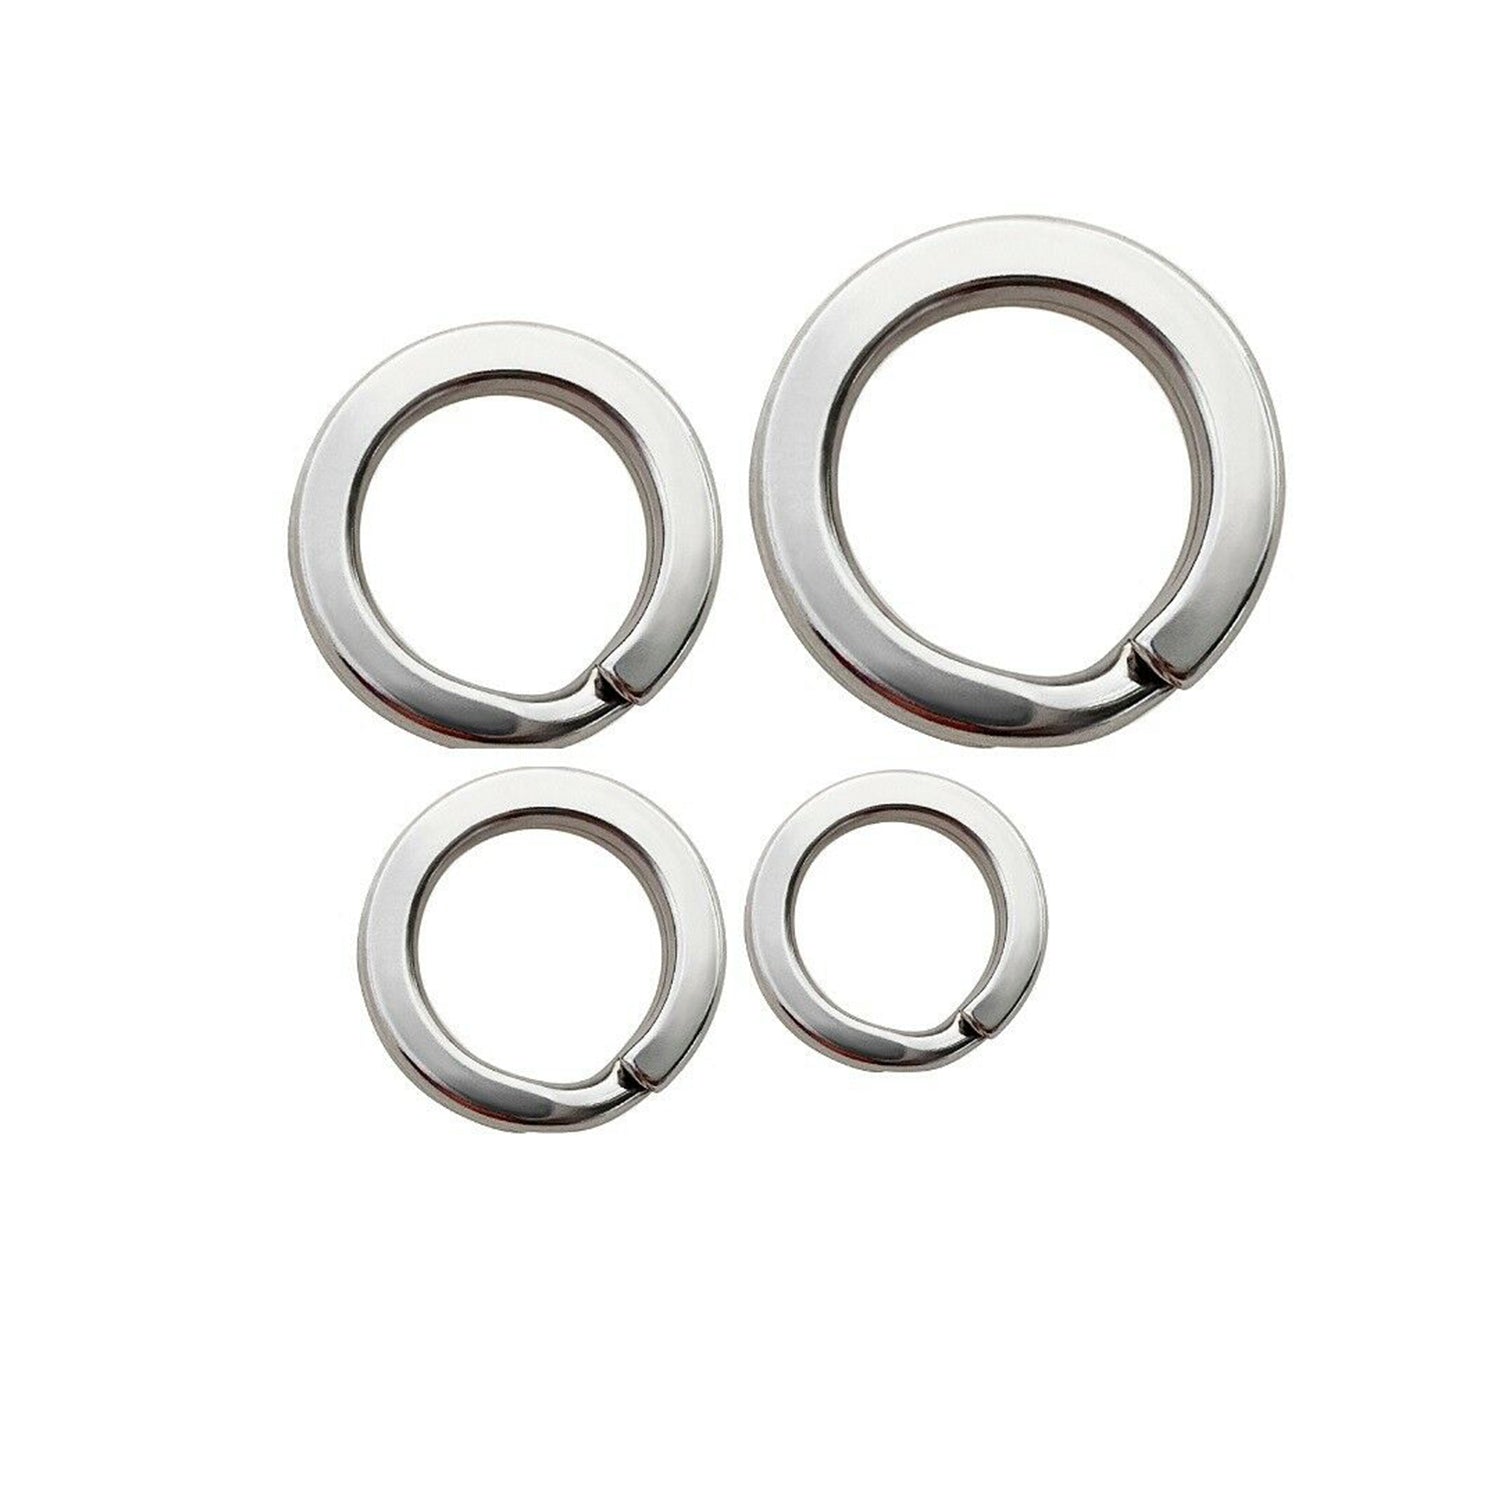 Fishing Split Rings,50 Pack 304 Stainless Steel Double Flat Ring - Yahoo  Shopping